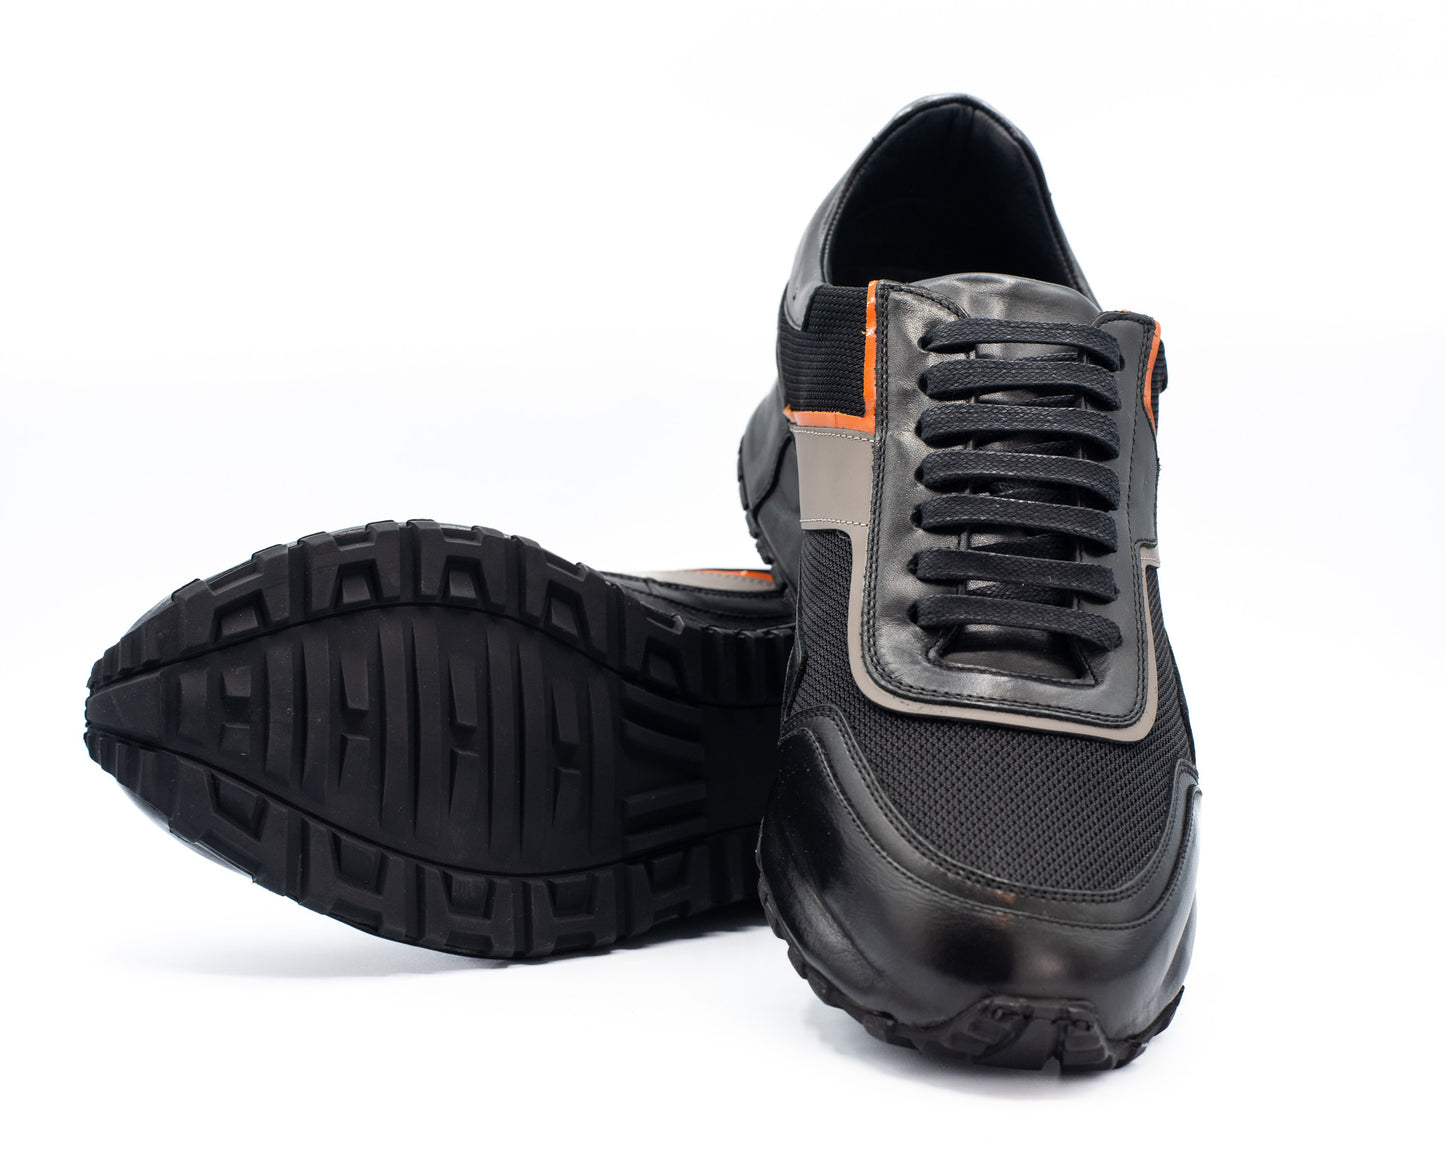 The Tach Black Leather Men Sneaker